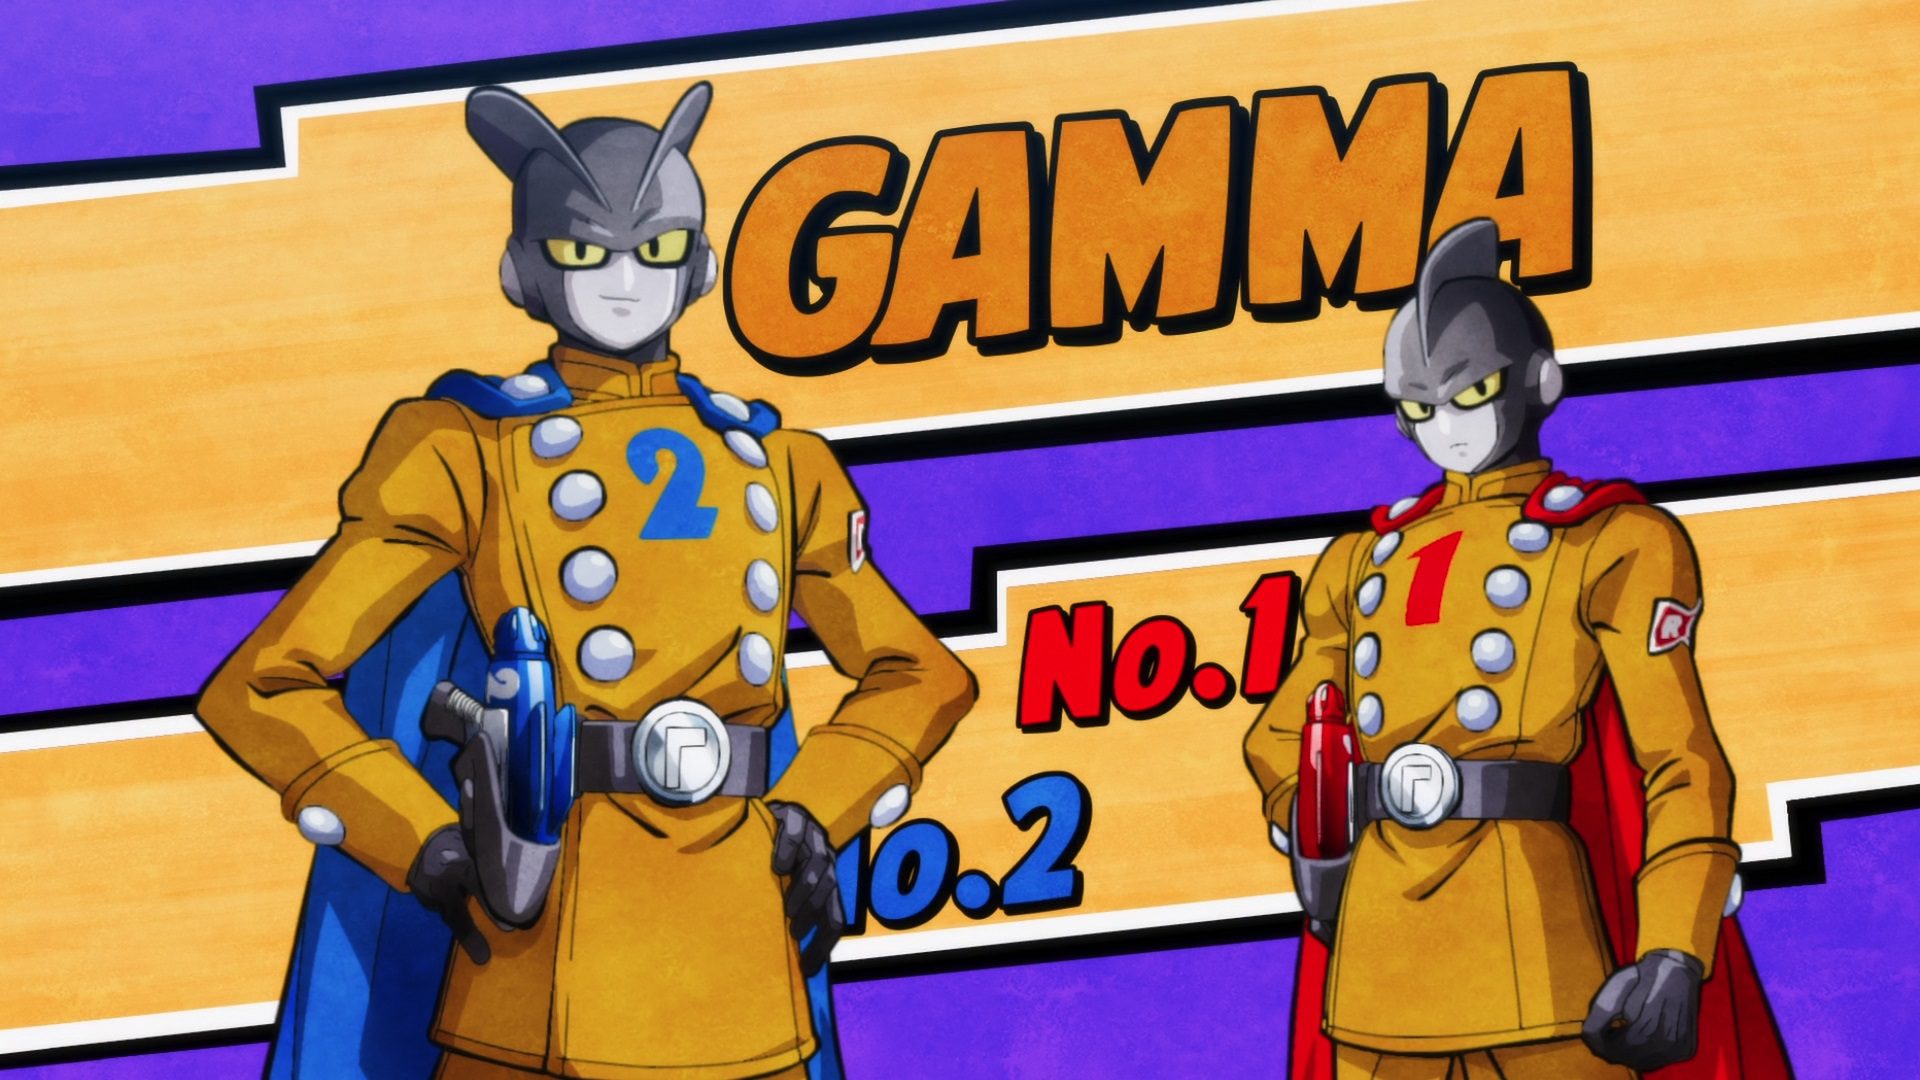 Gamma 1 and 2